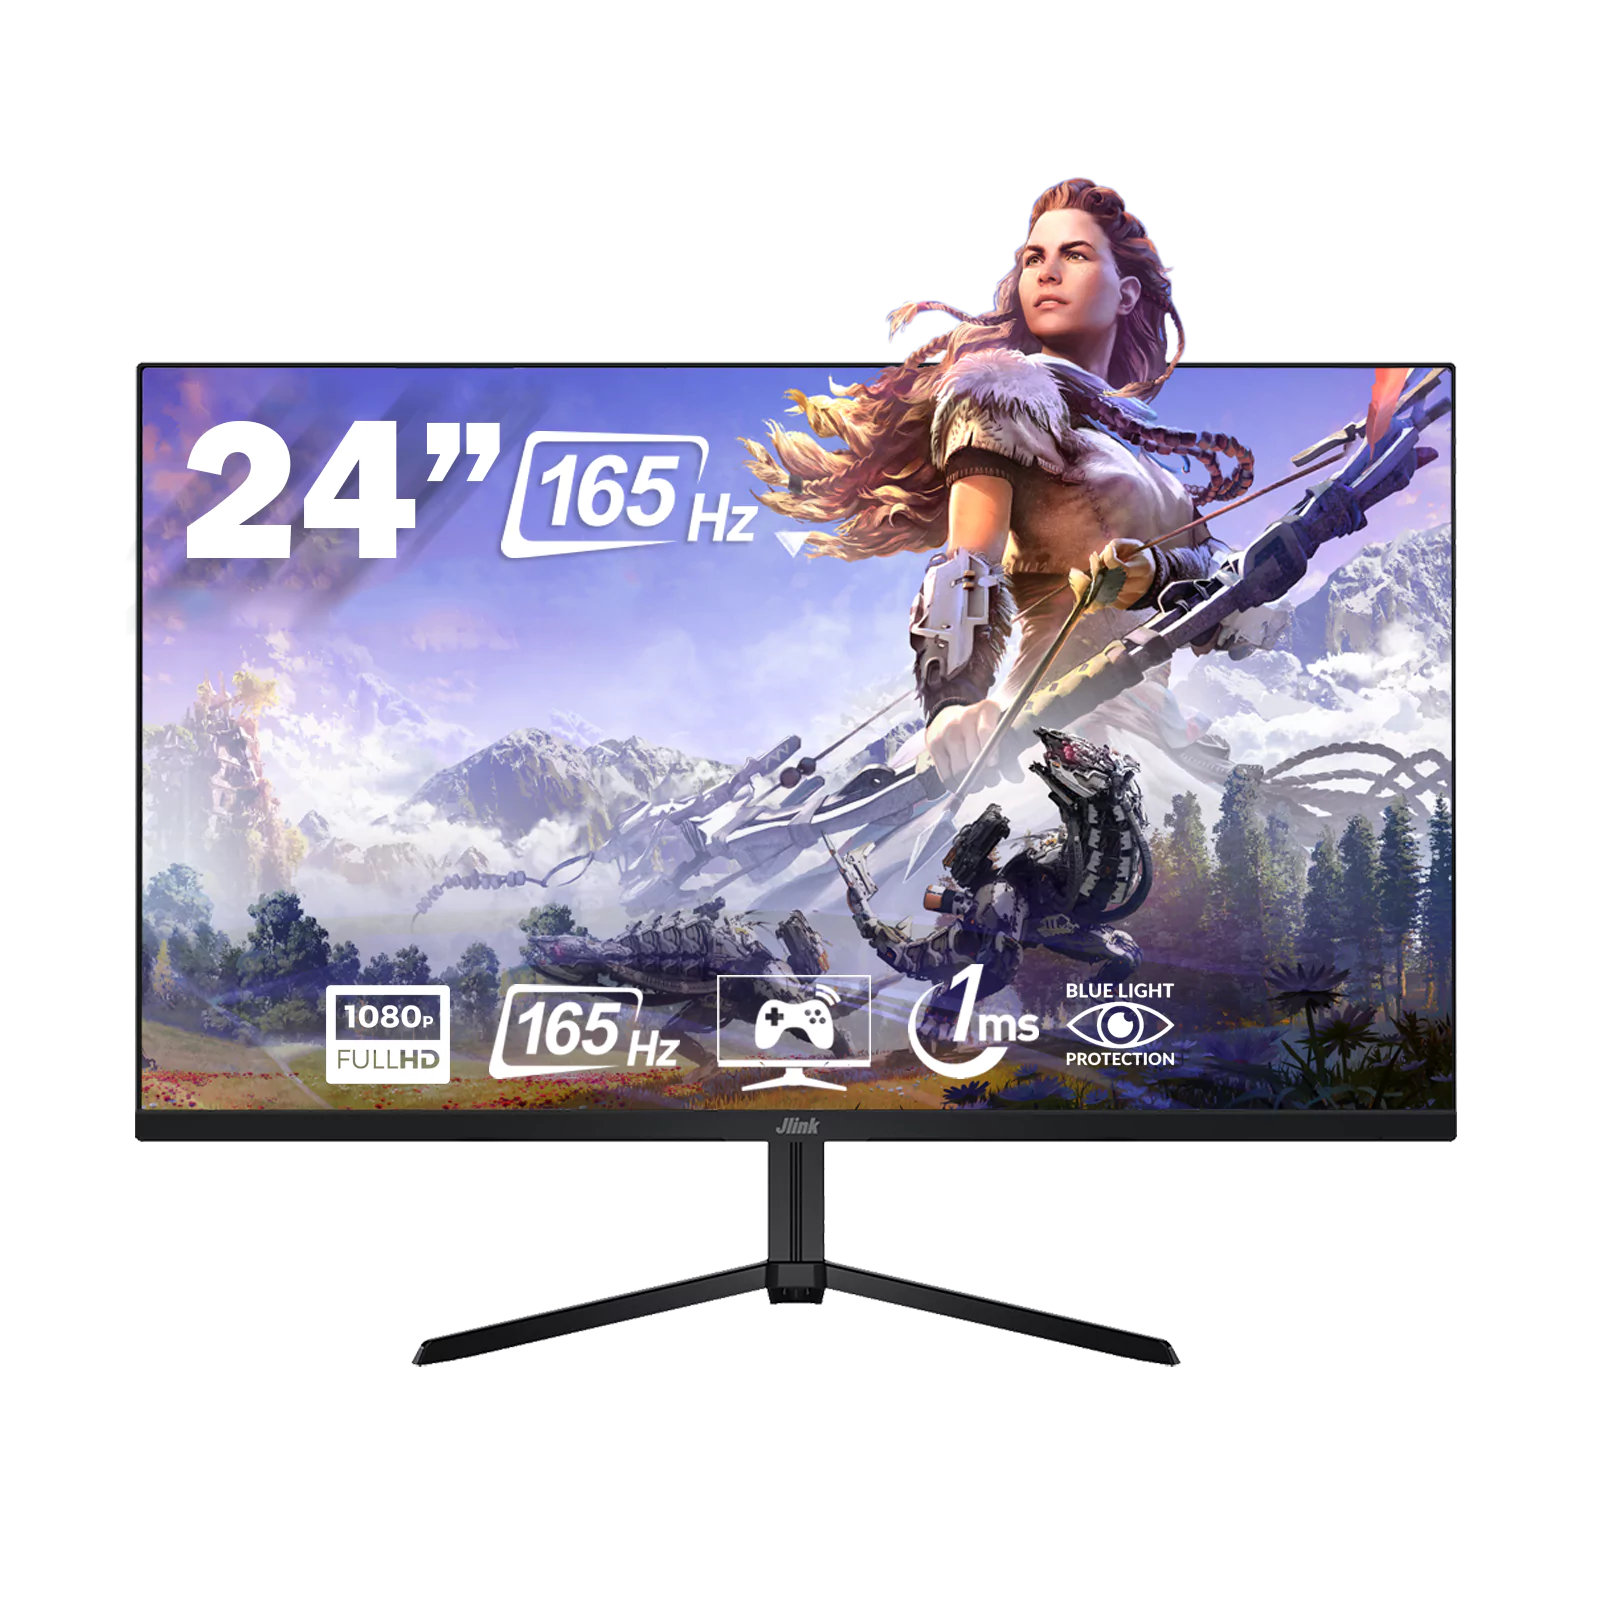 24 inch gaming monitor 165hz full hd